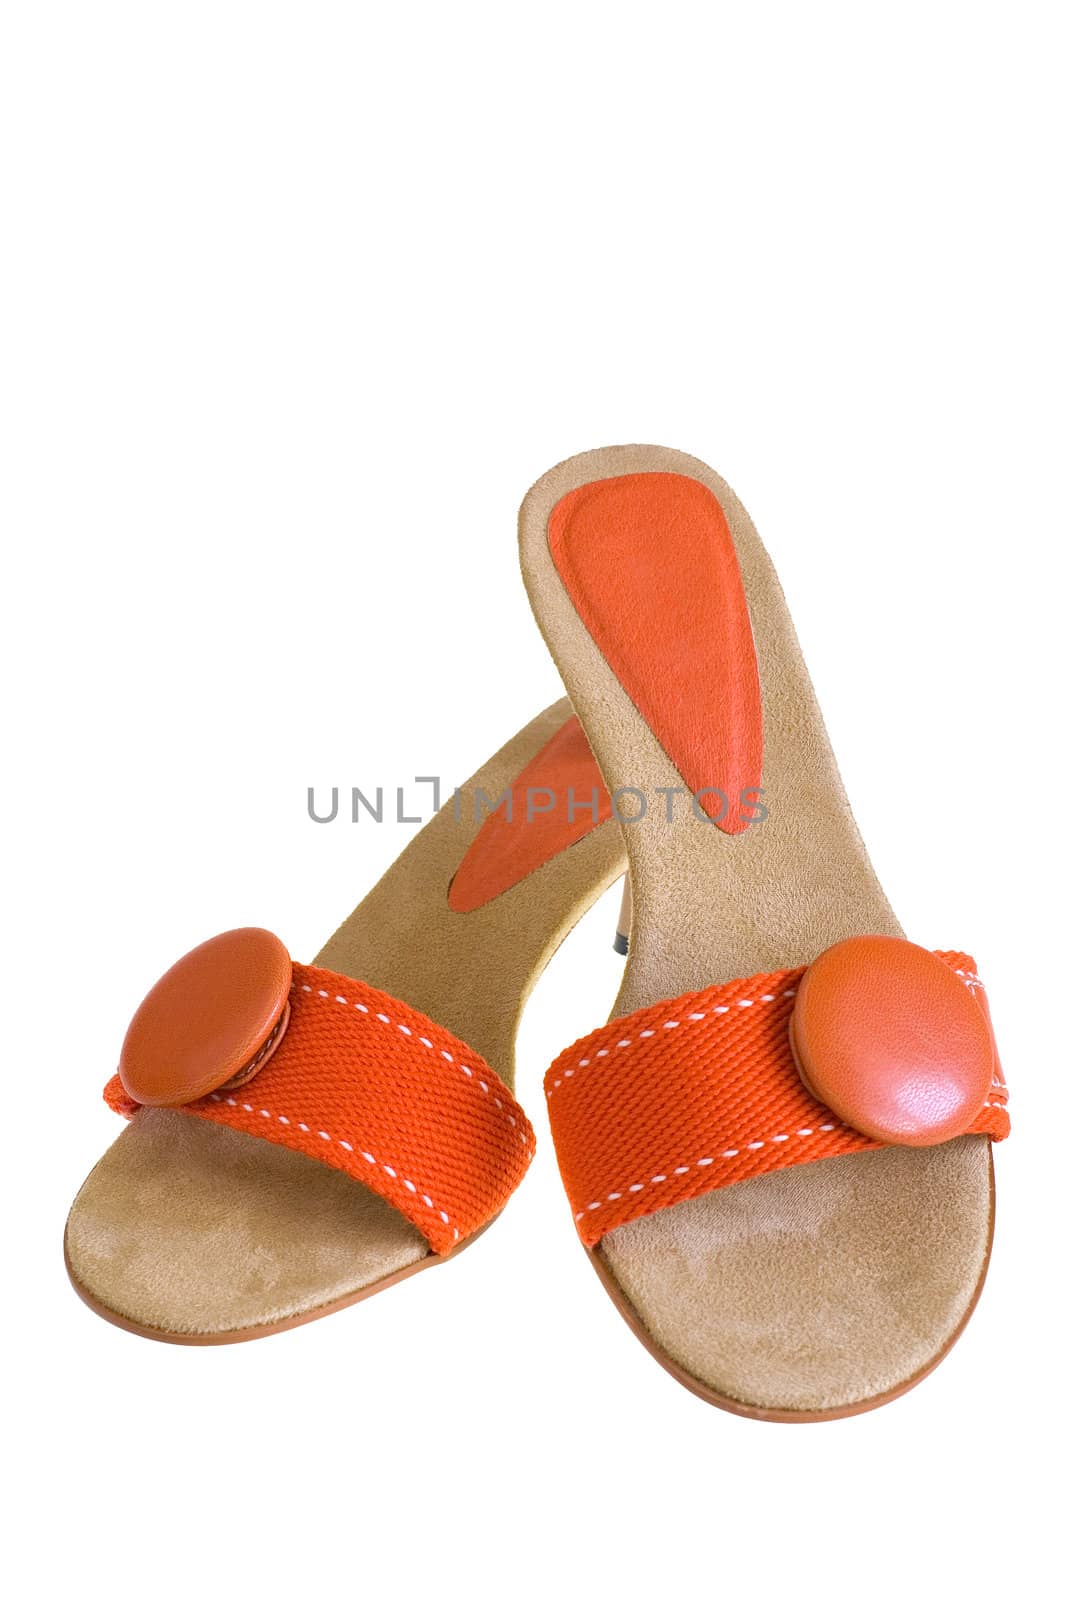 Orange Sandals on white background